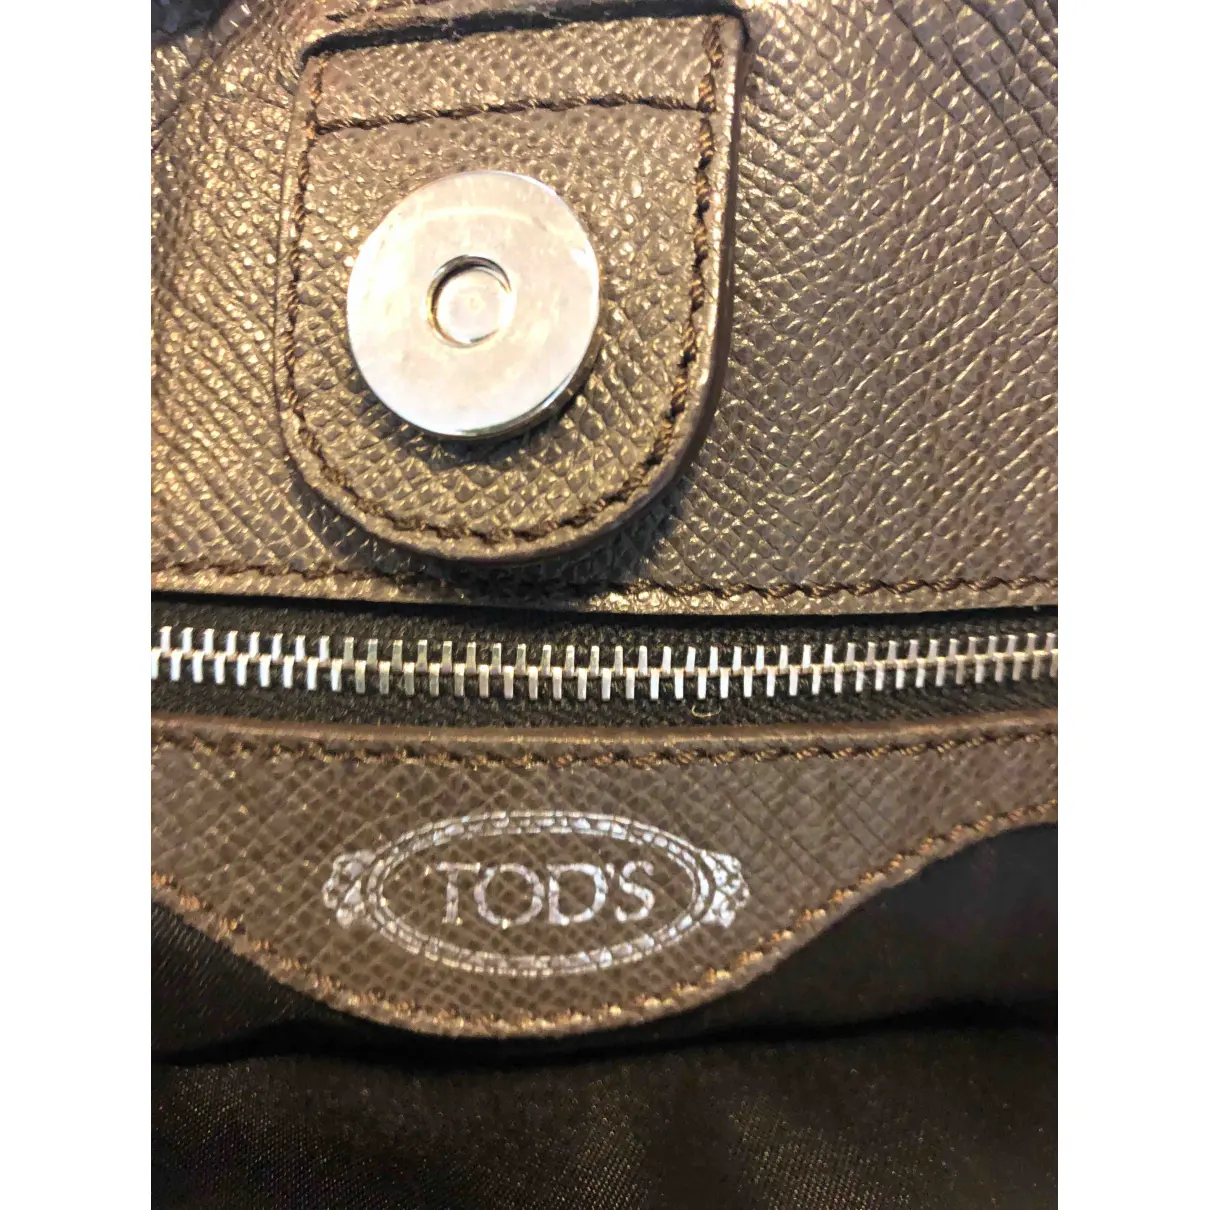 Luxury Tod's Handbags Women